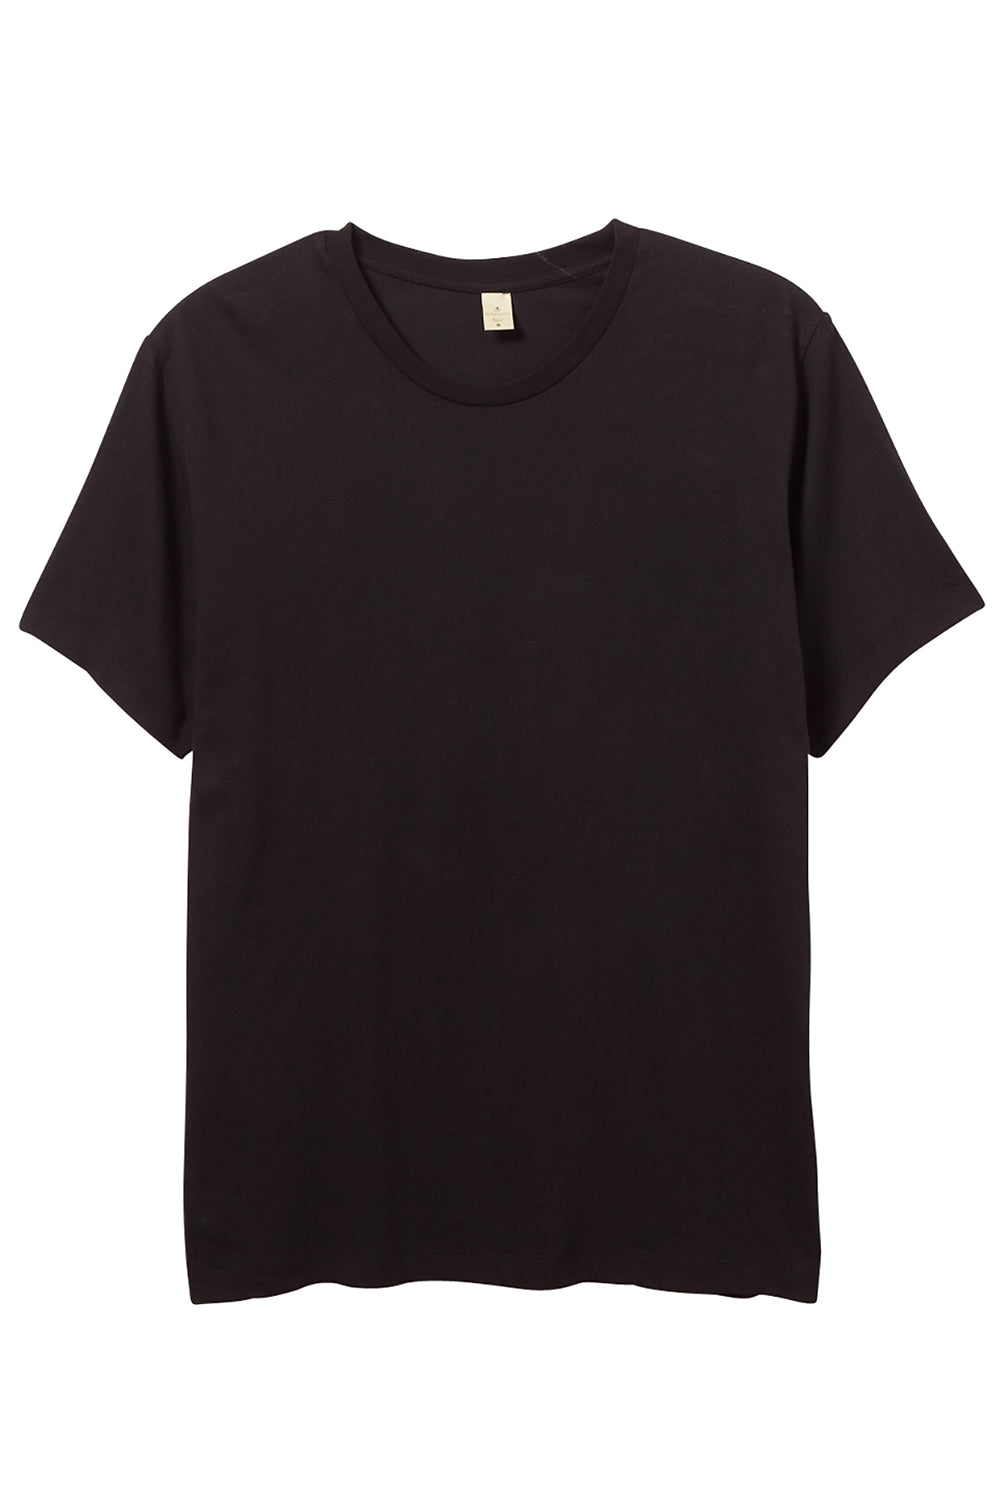 Alternative AA1070/1070 Mens Go To Jersey Short Sleeve Crewneck T-Shirt Black Flat Front